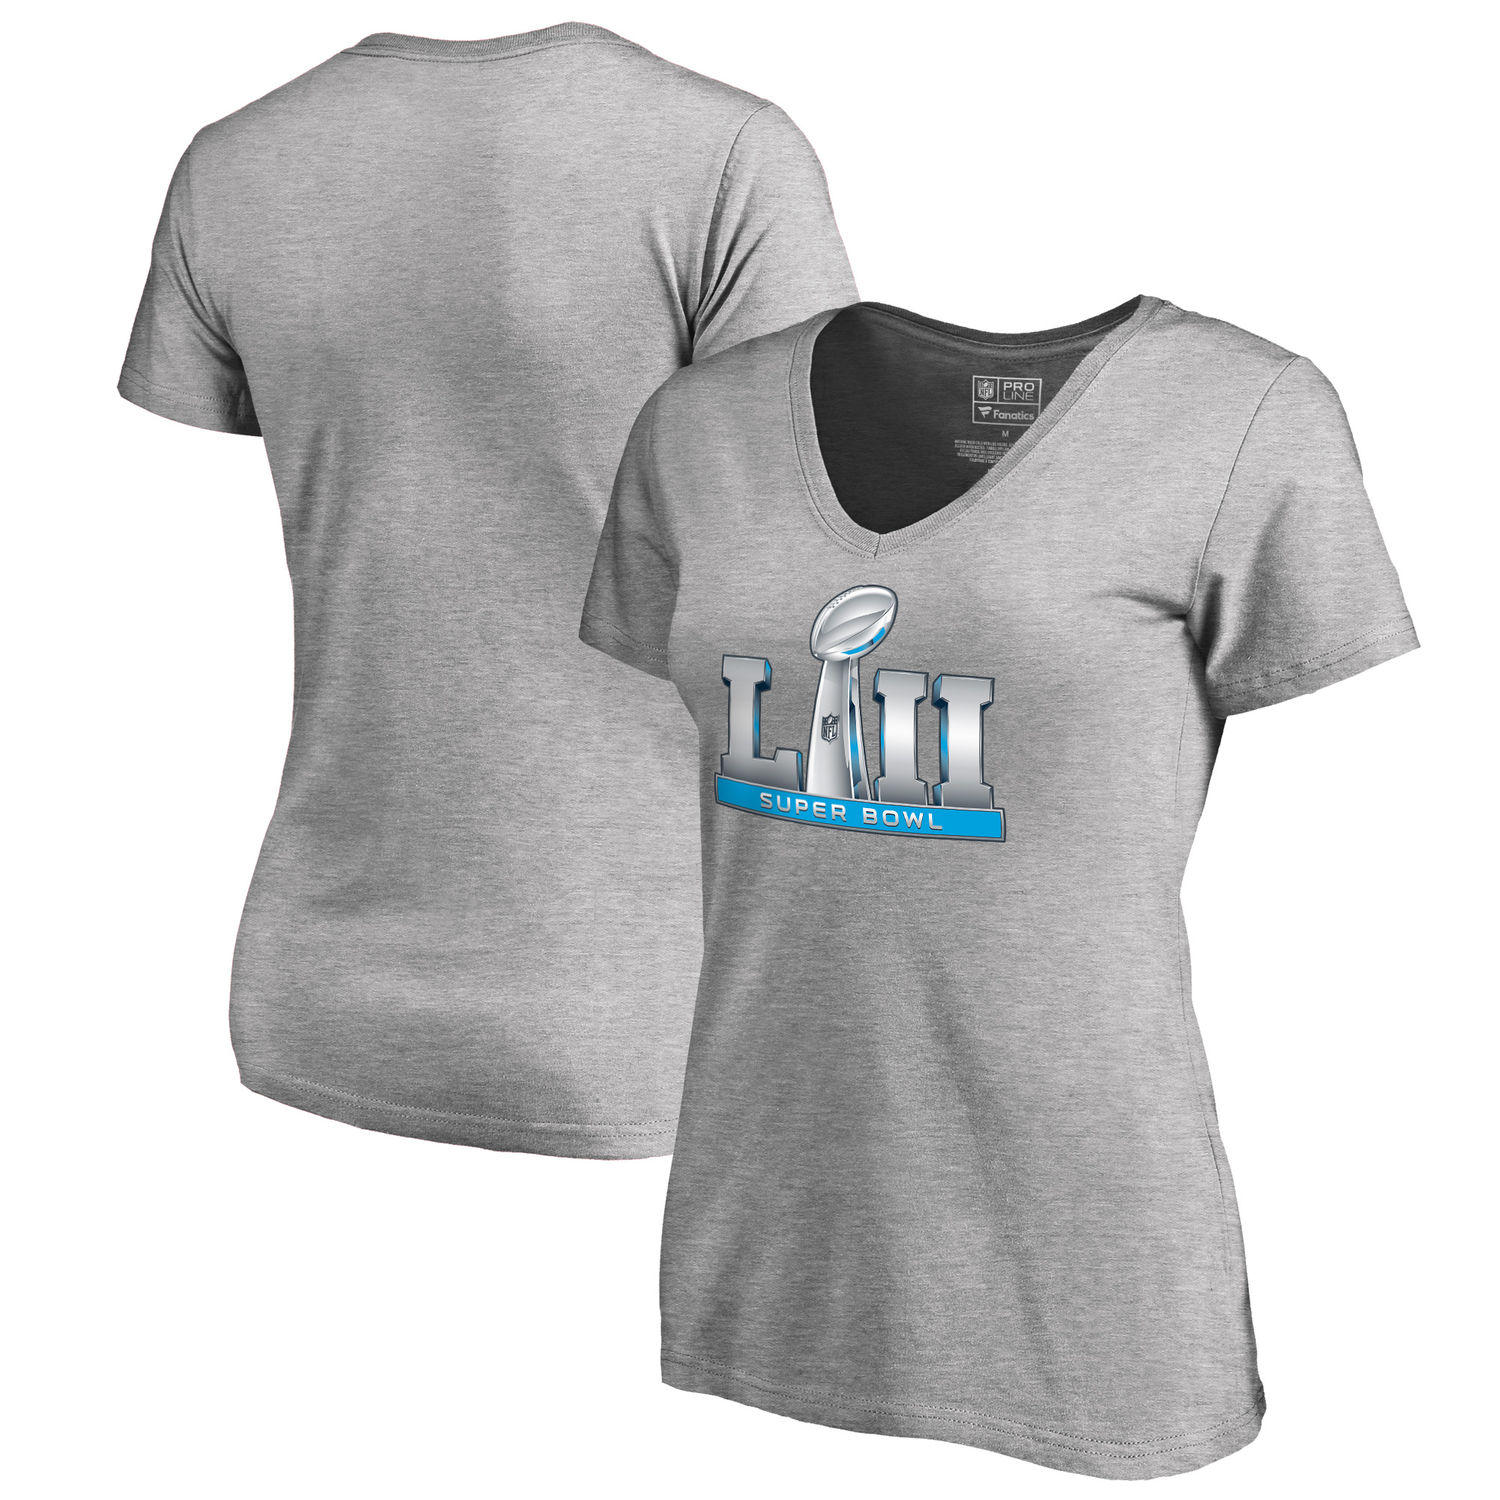 Women's NFL Pro Line by Fanatics Branded Heather Gray Super Bowl LII Event Plus Size T Shirt